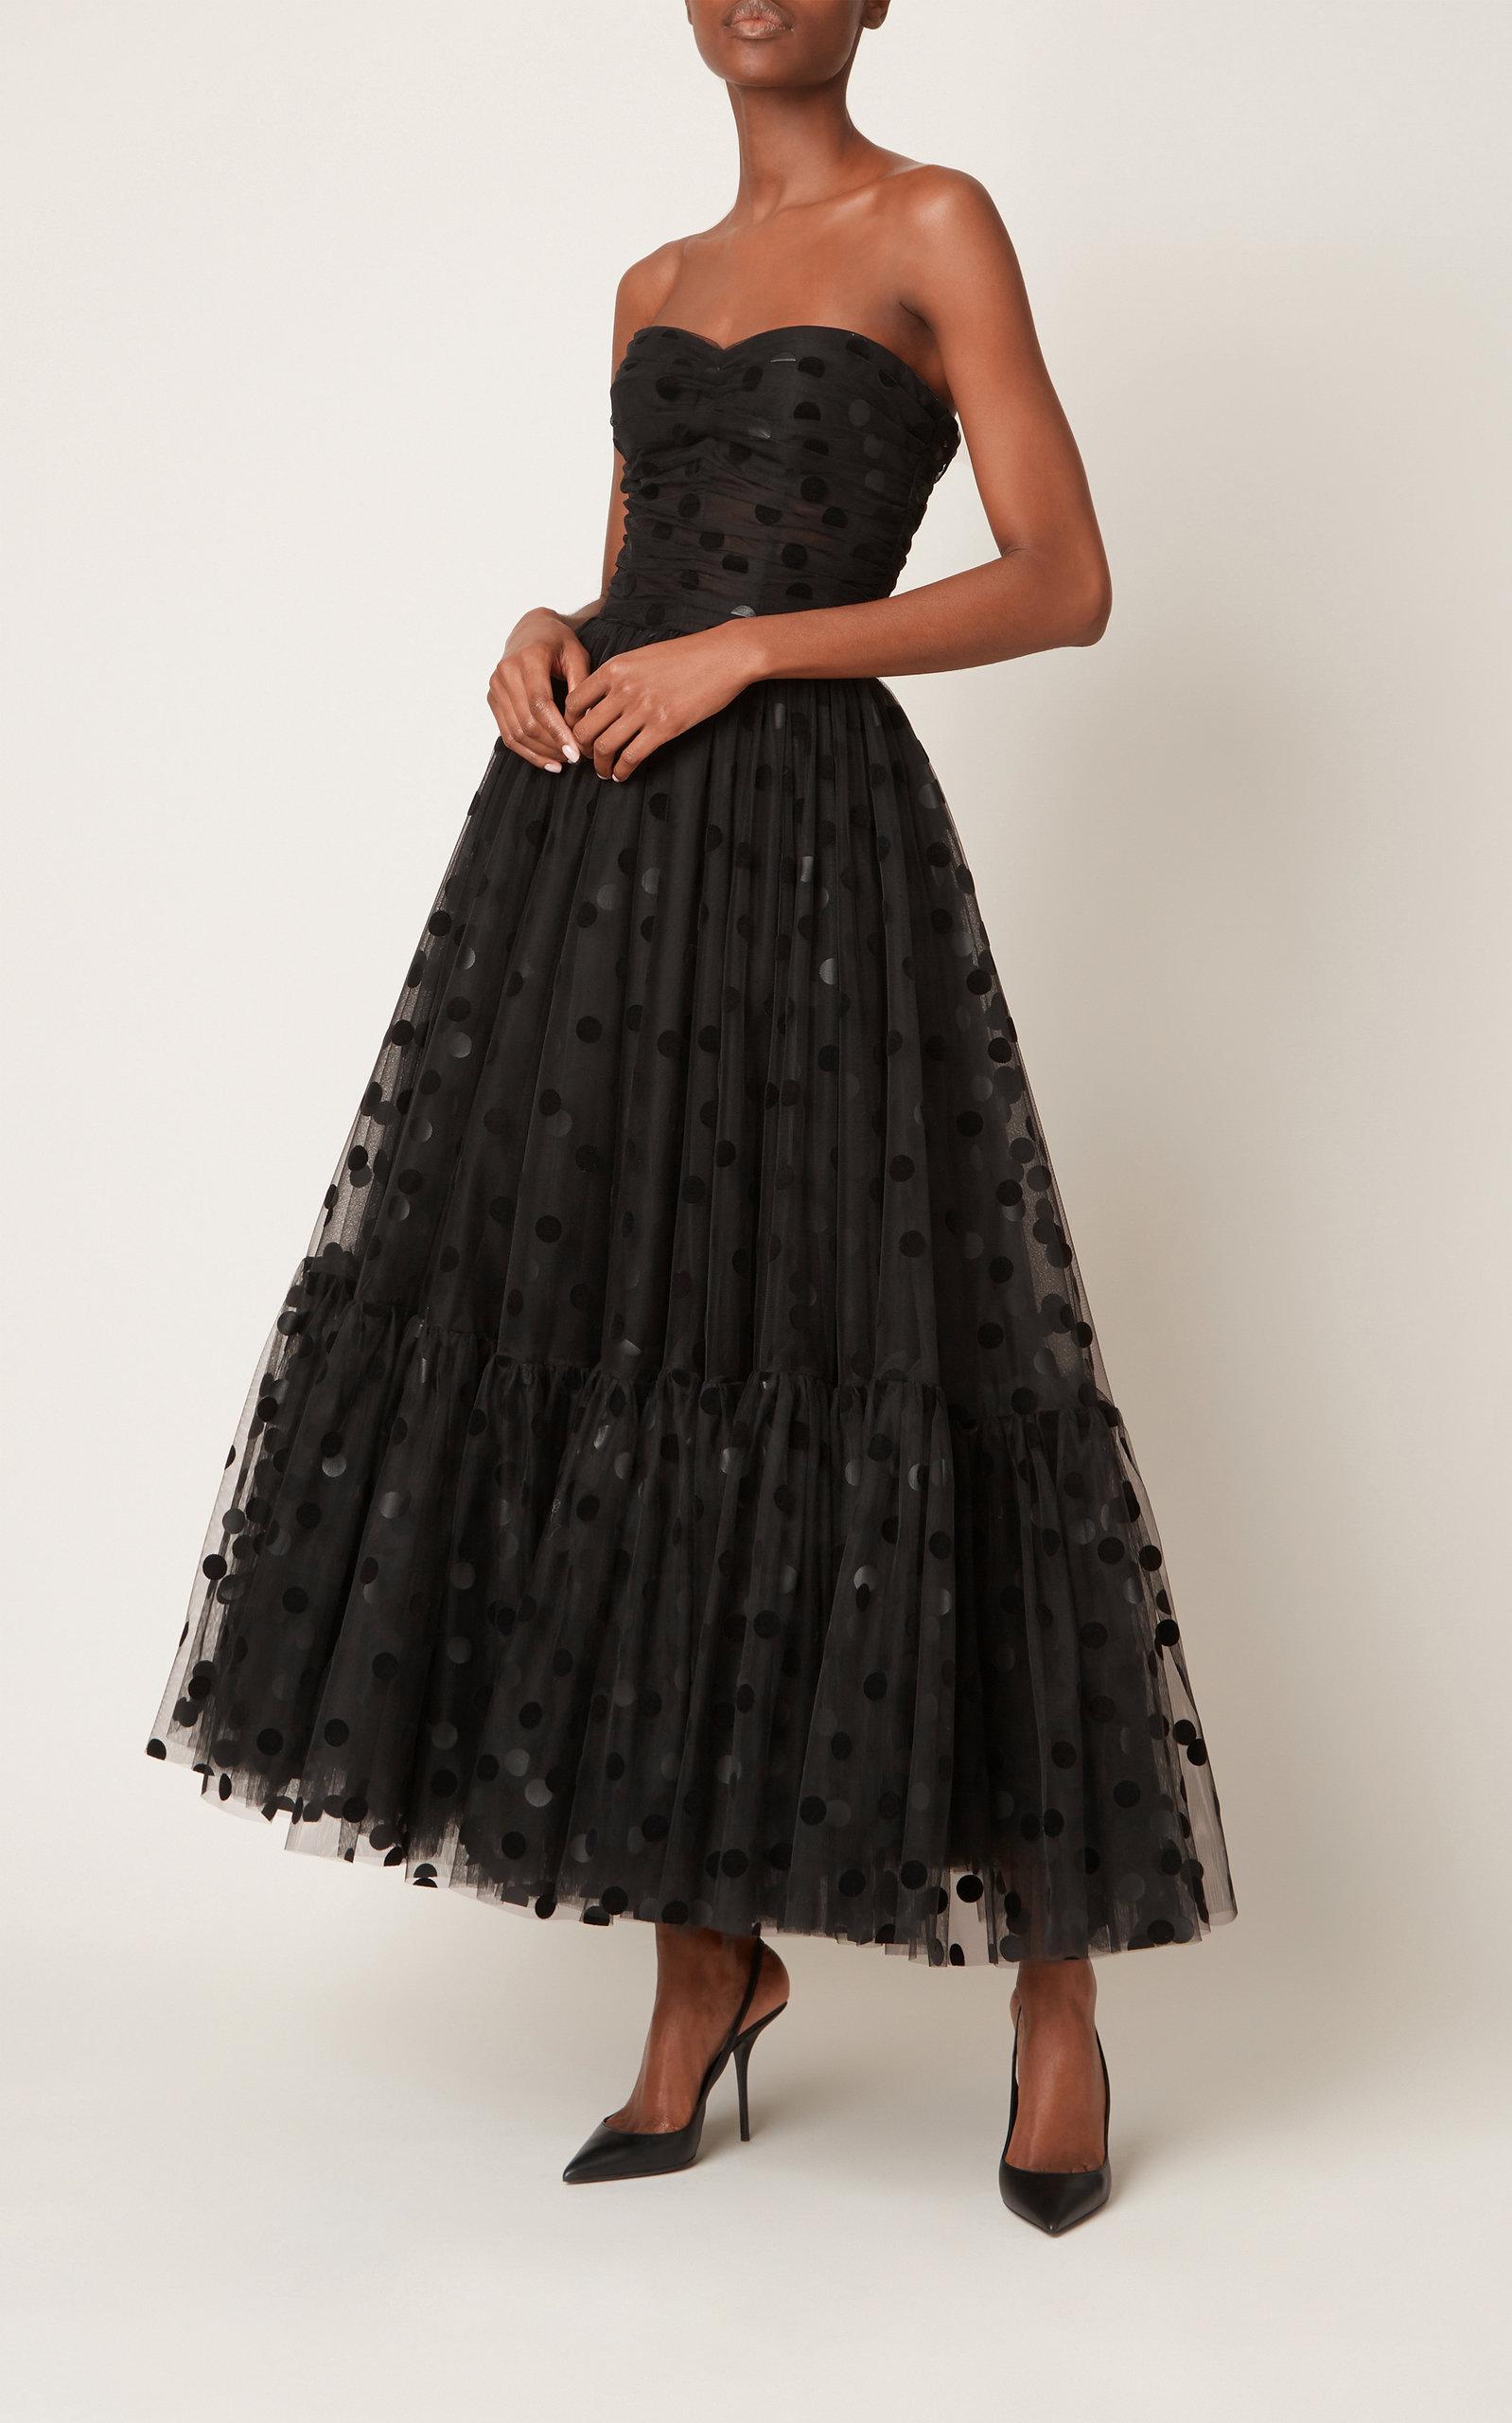 DOLCE & GABBANA Dress Black Silk Stretch Sheath Mermaid Gown IT40/US6/S  $4000 | eBay